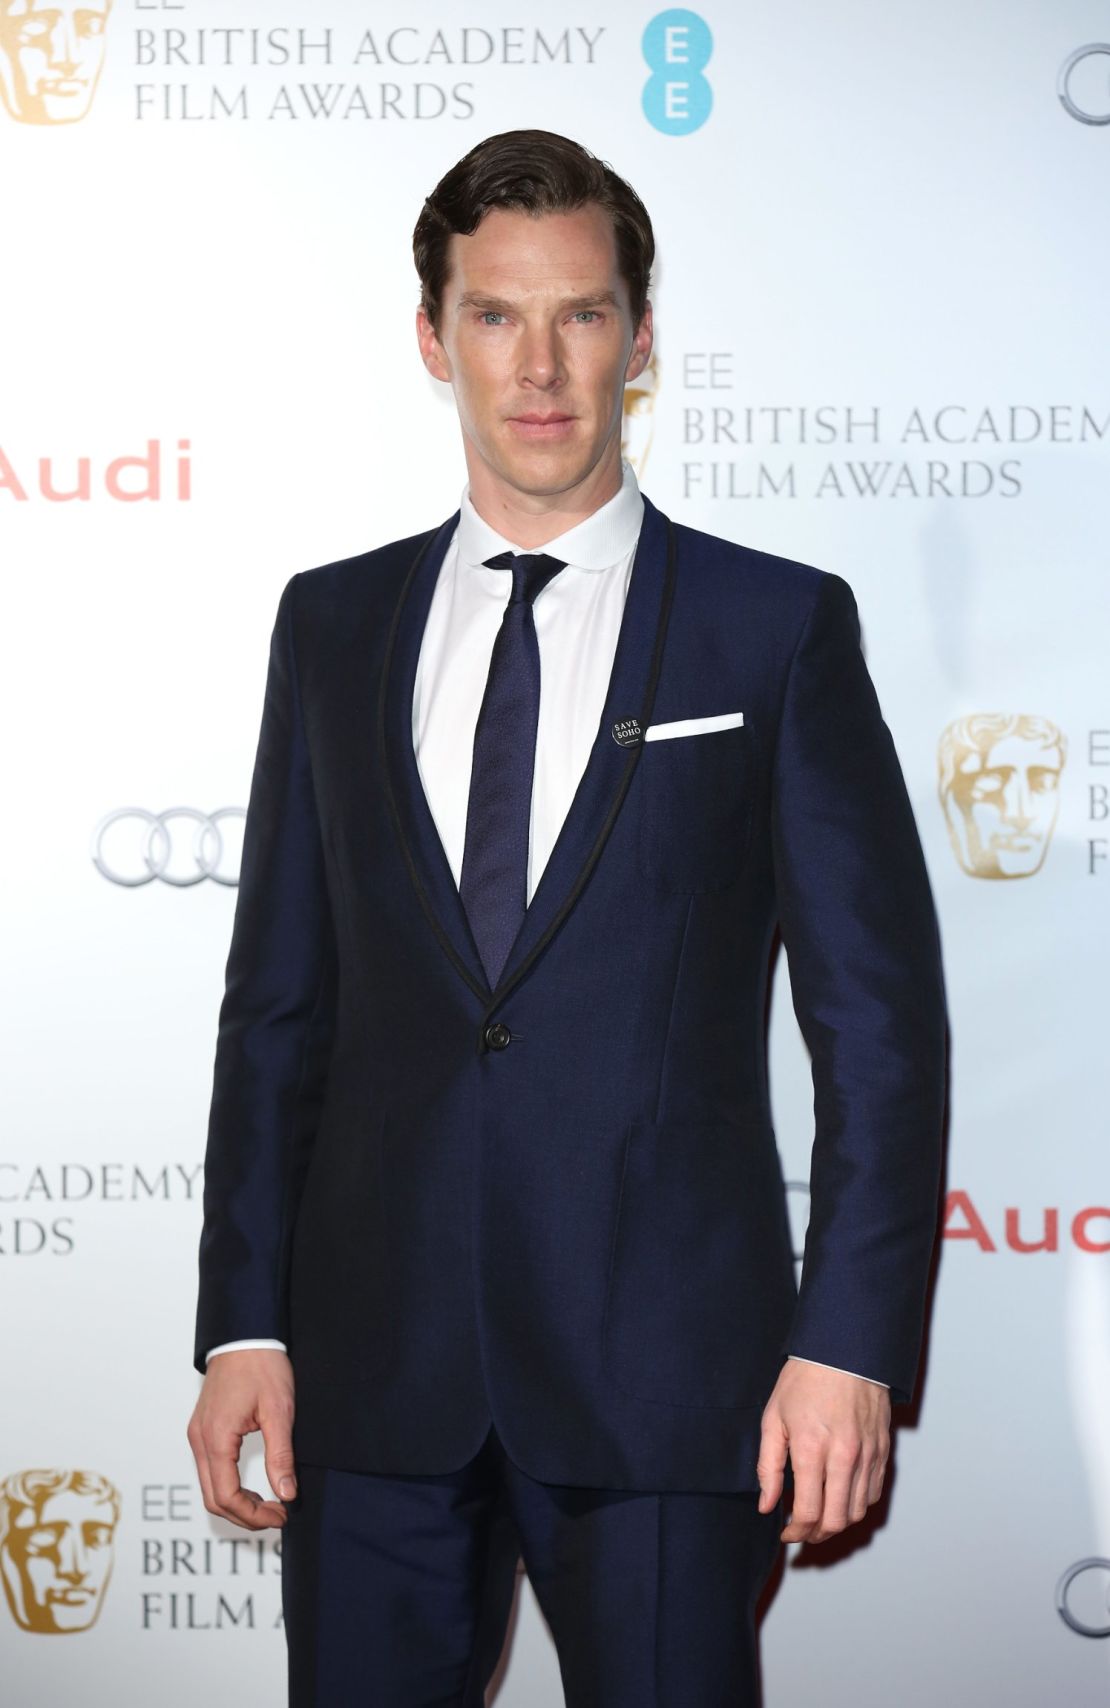 Actor Benedict Cumberbatch is distantly related to England's King Richard III